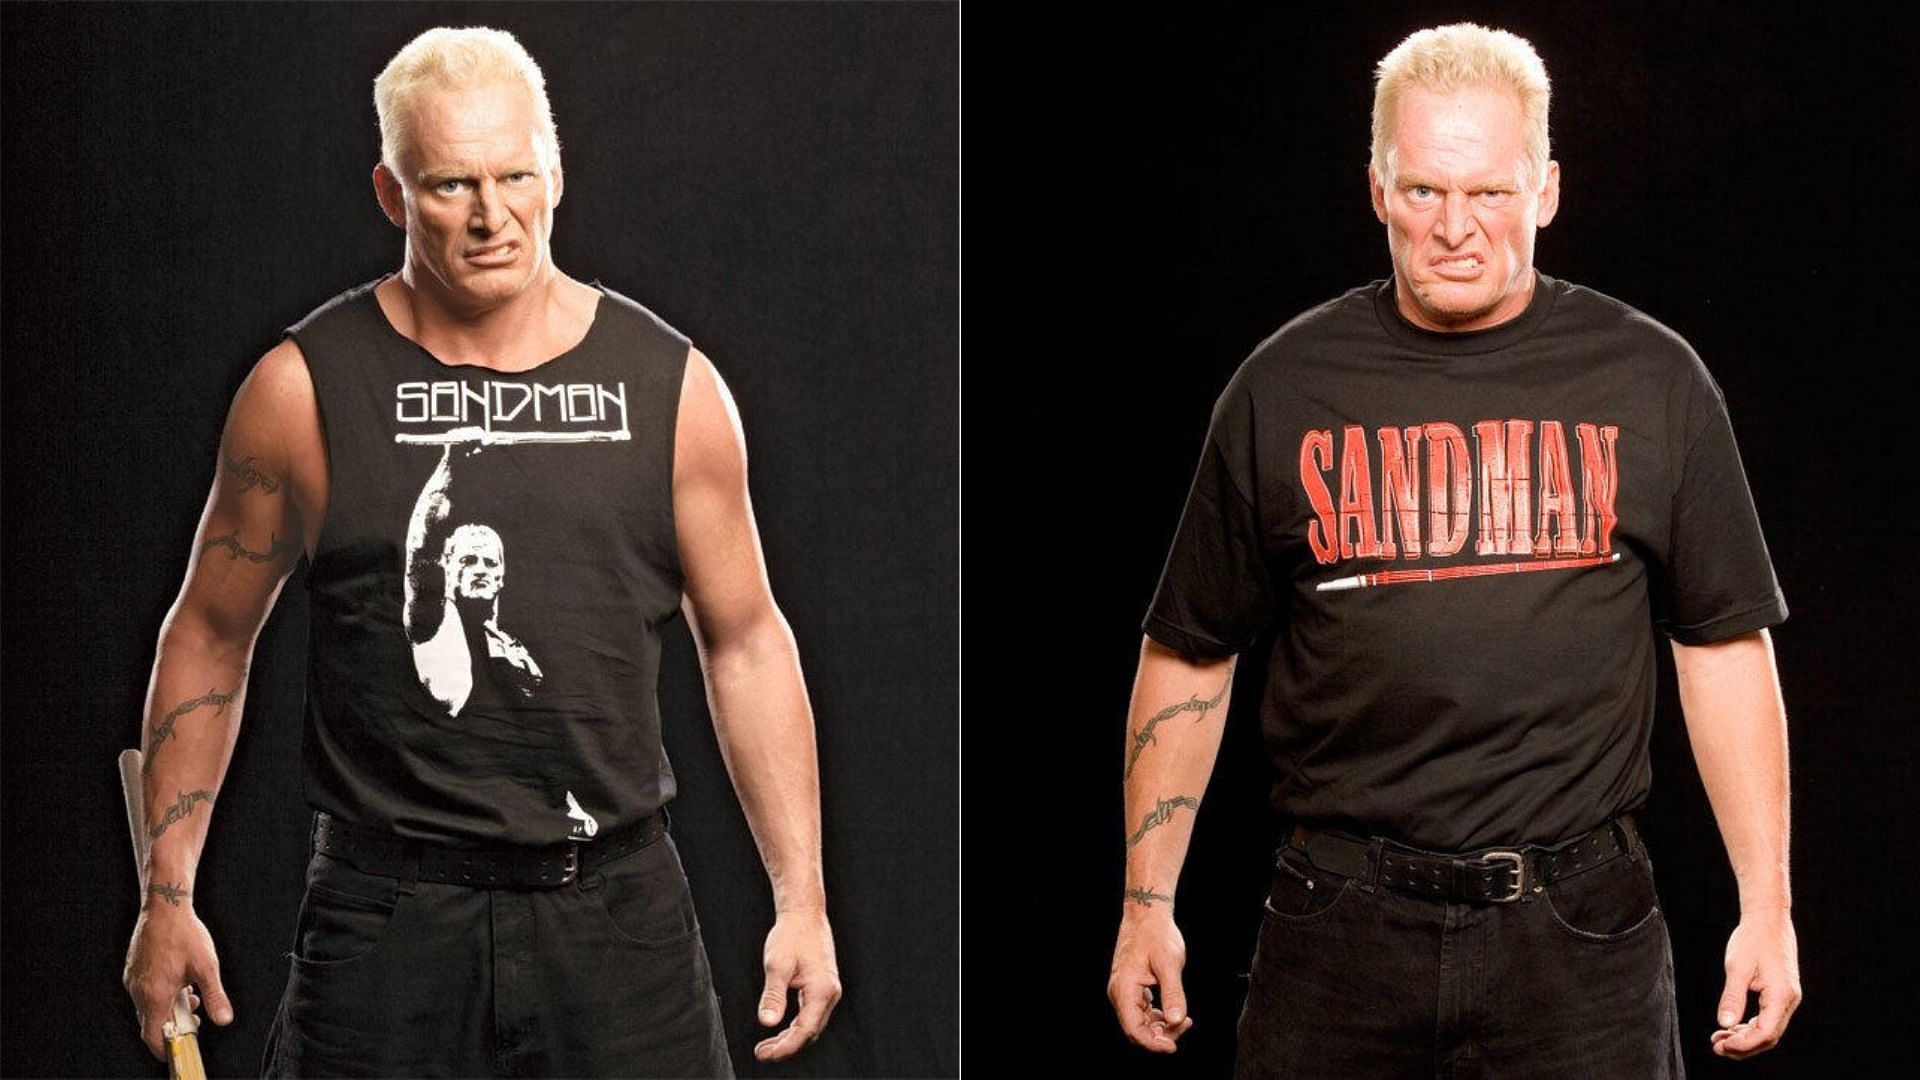 Former ECW, WCW, and WWE star The Sandman